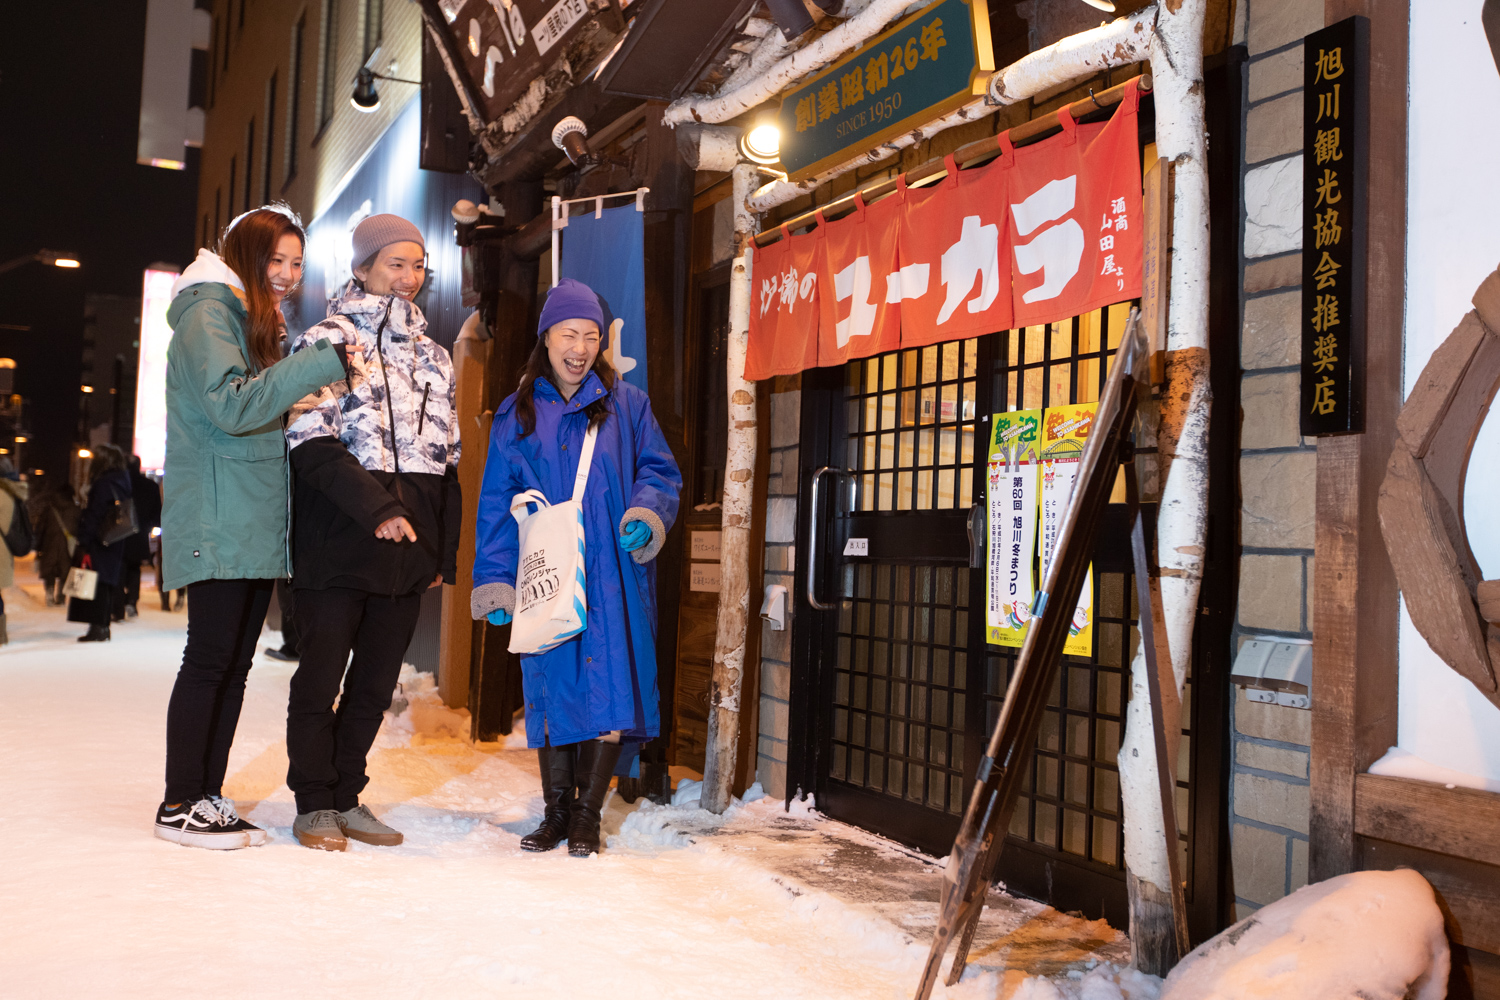 Within a 500-step walk from the hotel, the long-established izakaya "Fireside Yukara" boasts local food.